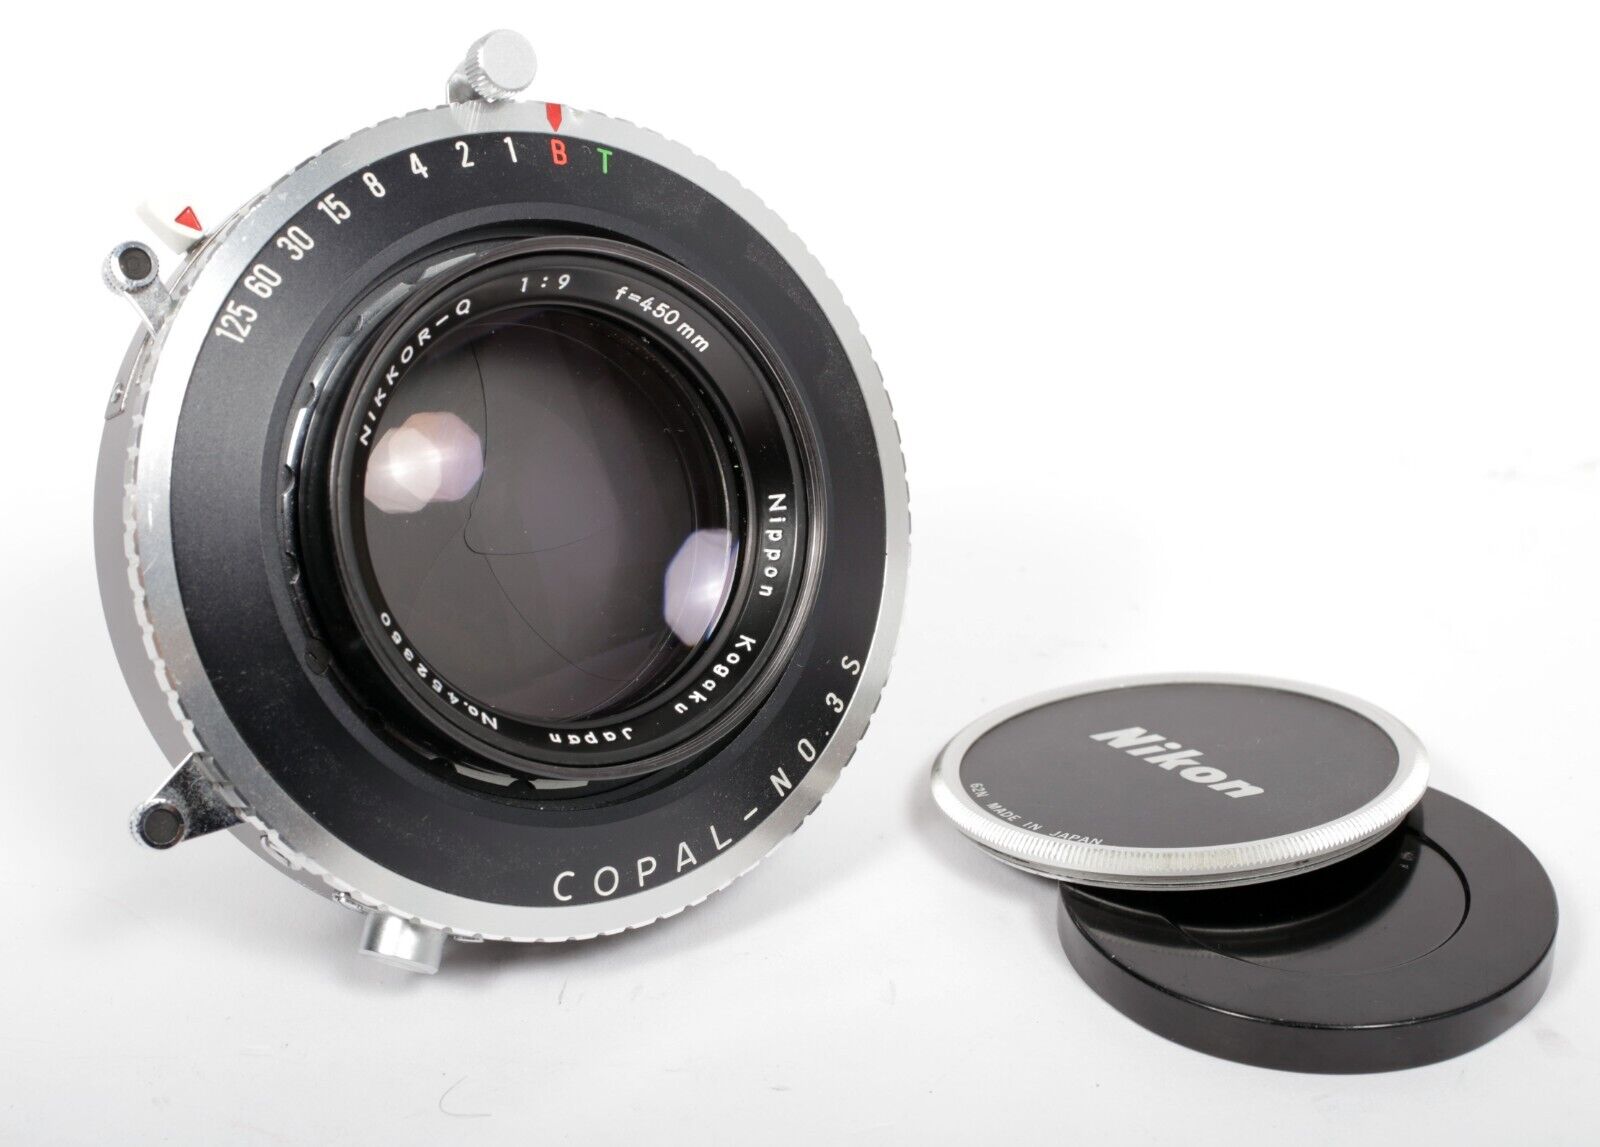 Nikon Nikkor Q 450mm F9 lens in Copal #3 shutter #8563